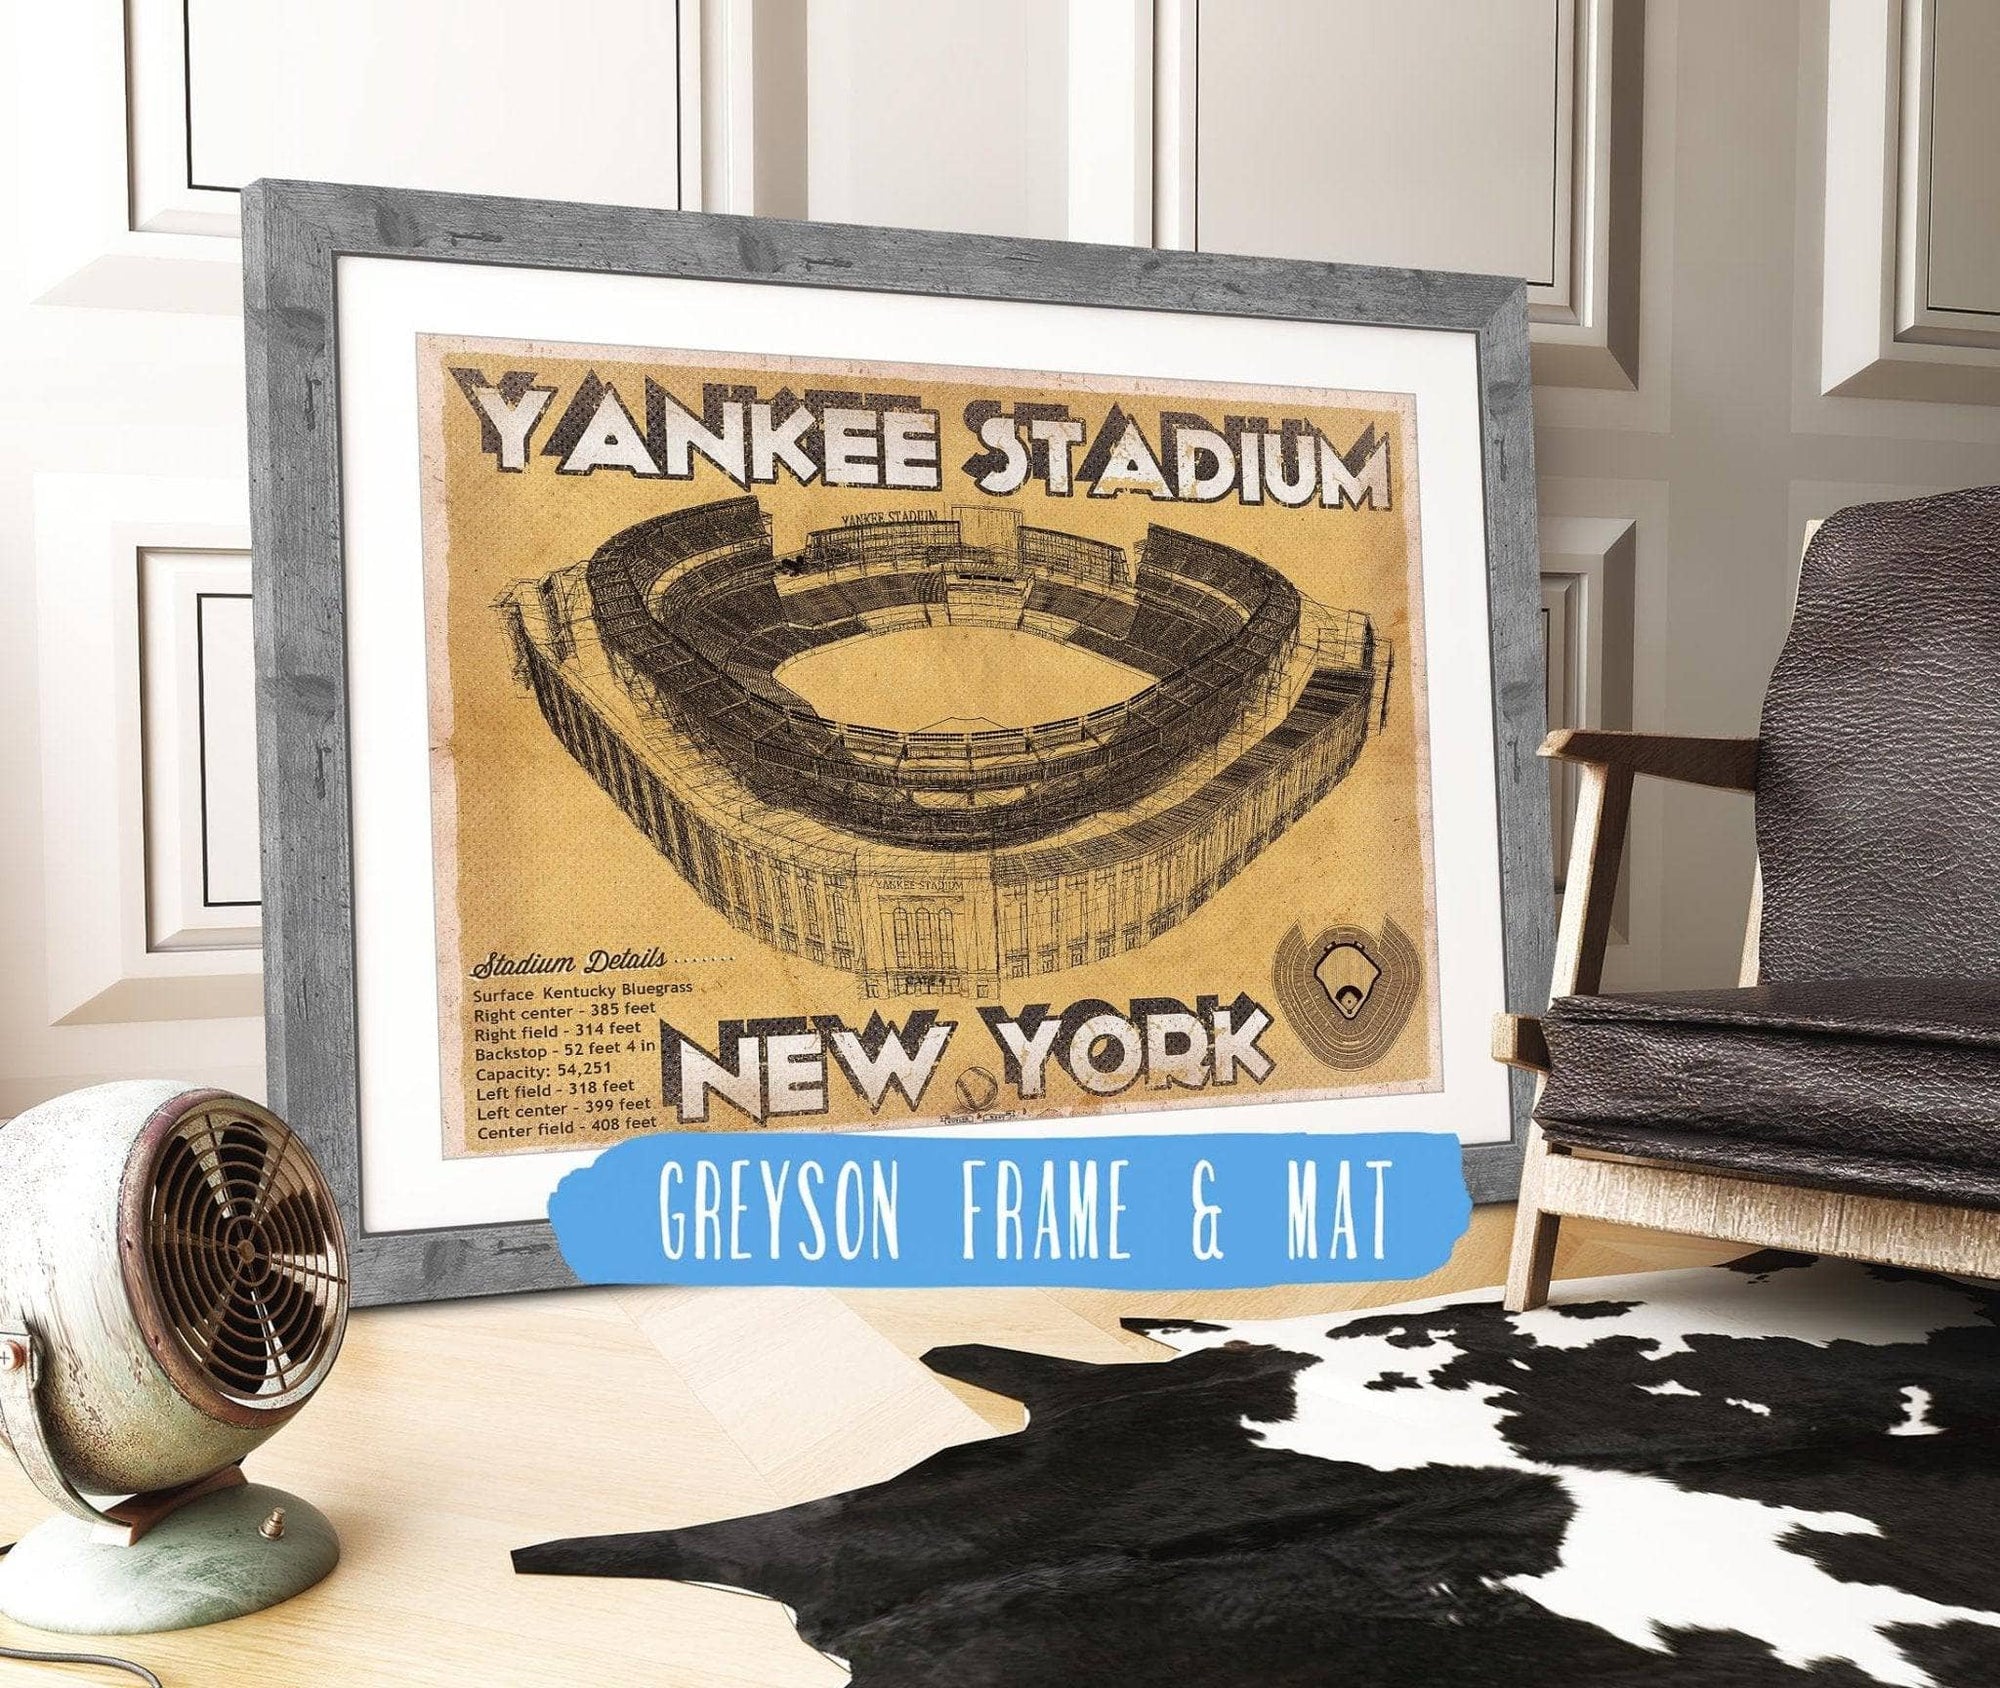 Cutler West Baseball Collection 14" x 11" / Greyson Frame & Mat NY Yankees - Vintage Yankee Stadium Blueprint Baseball Print 715530501